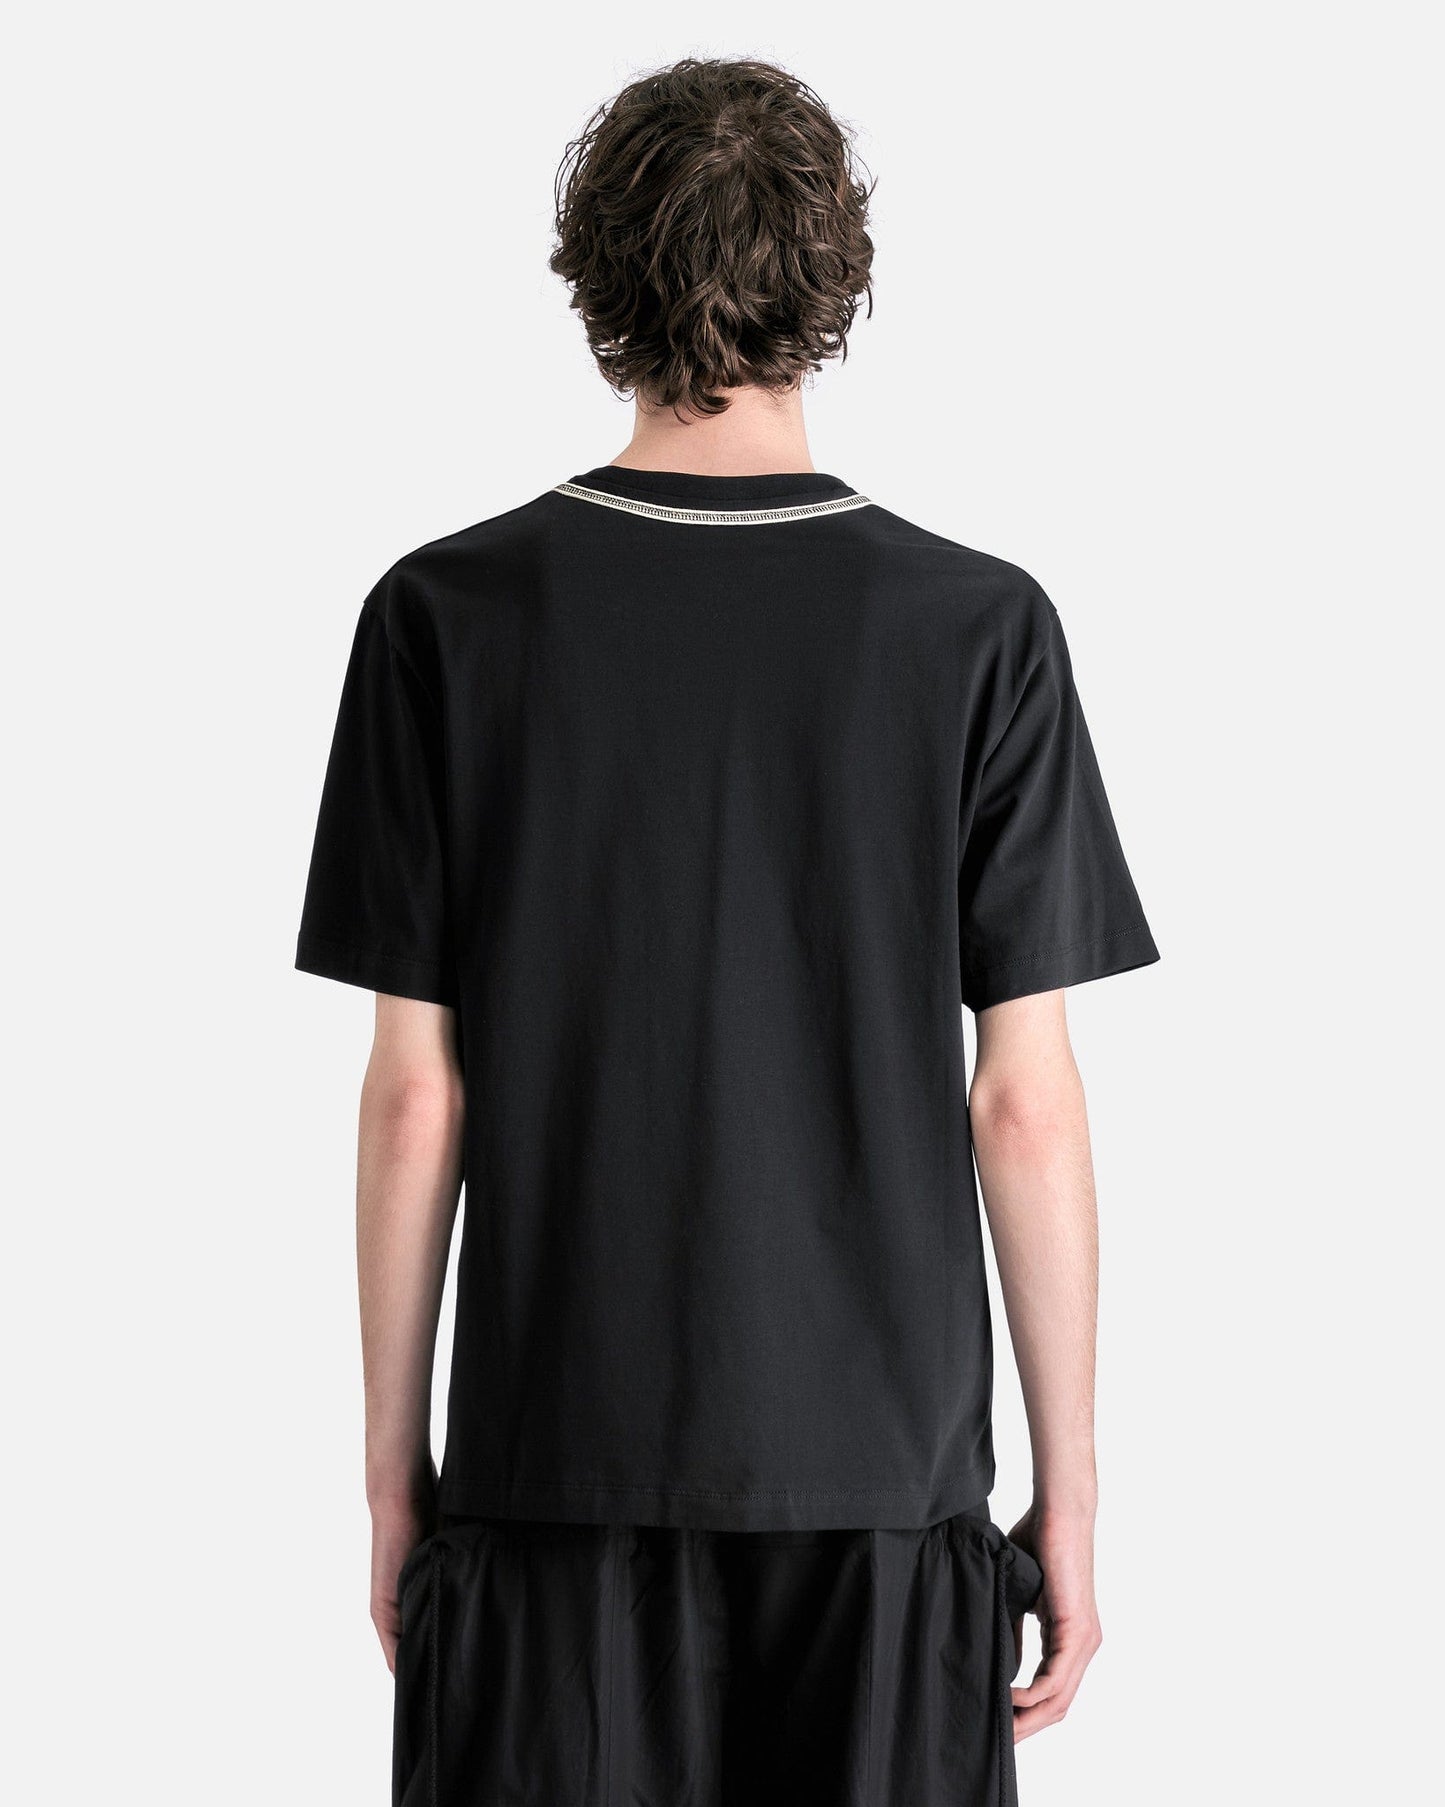 Craig Green Men's T-Shirts Flatlock Lace T-Shirt in Black/Cream